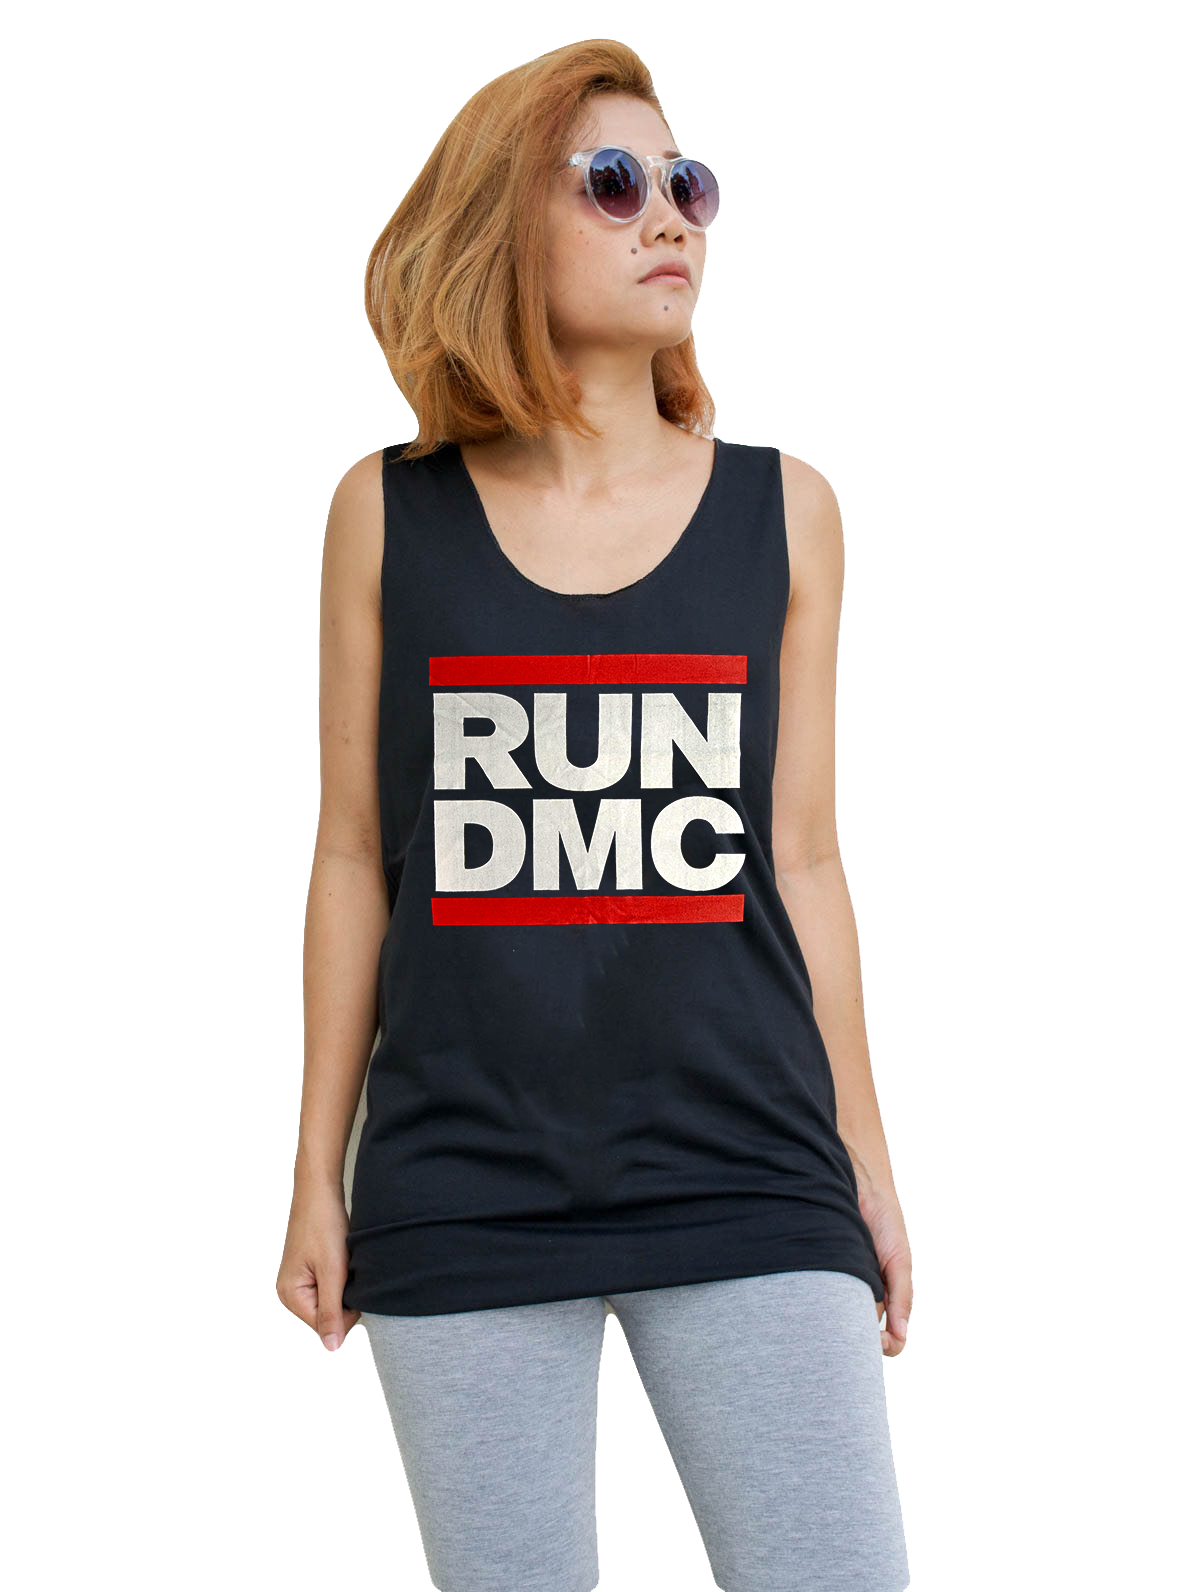 Unisex RUN DMC Tank-Top Singlet vest Sleeveless T-shirt